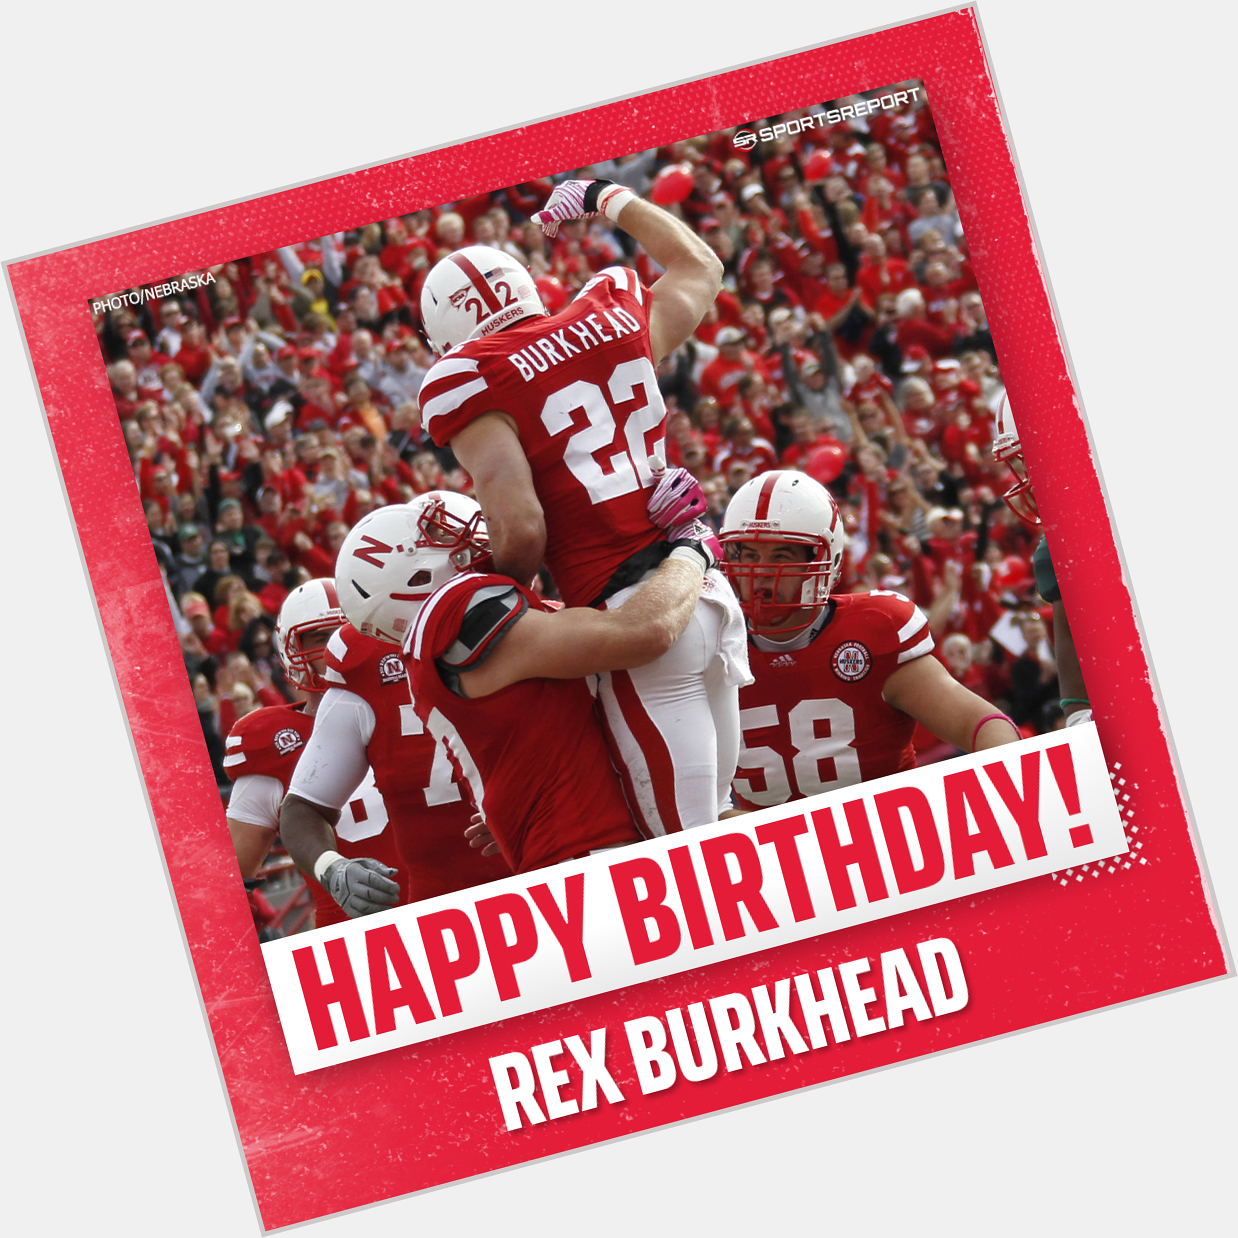 Happy Birthday to great, Rex Burkhead!  